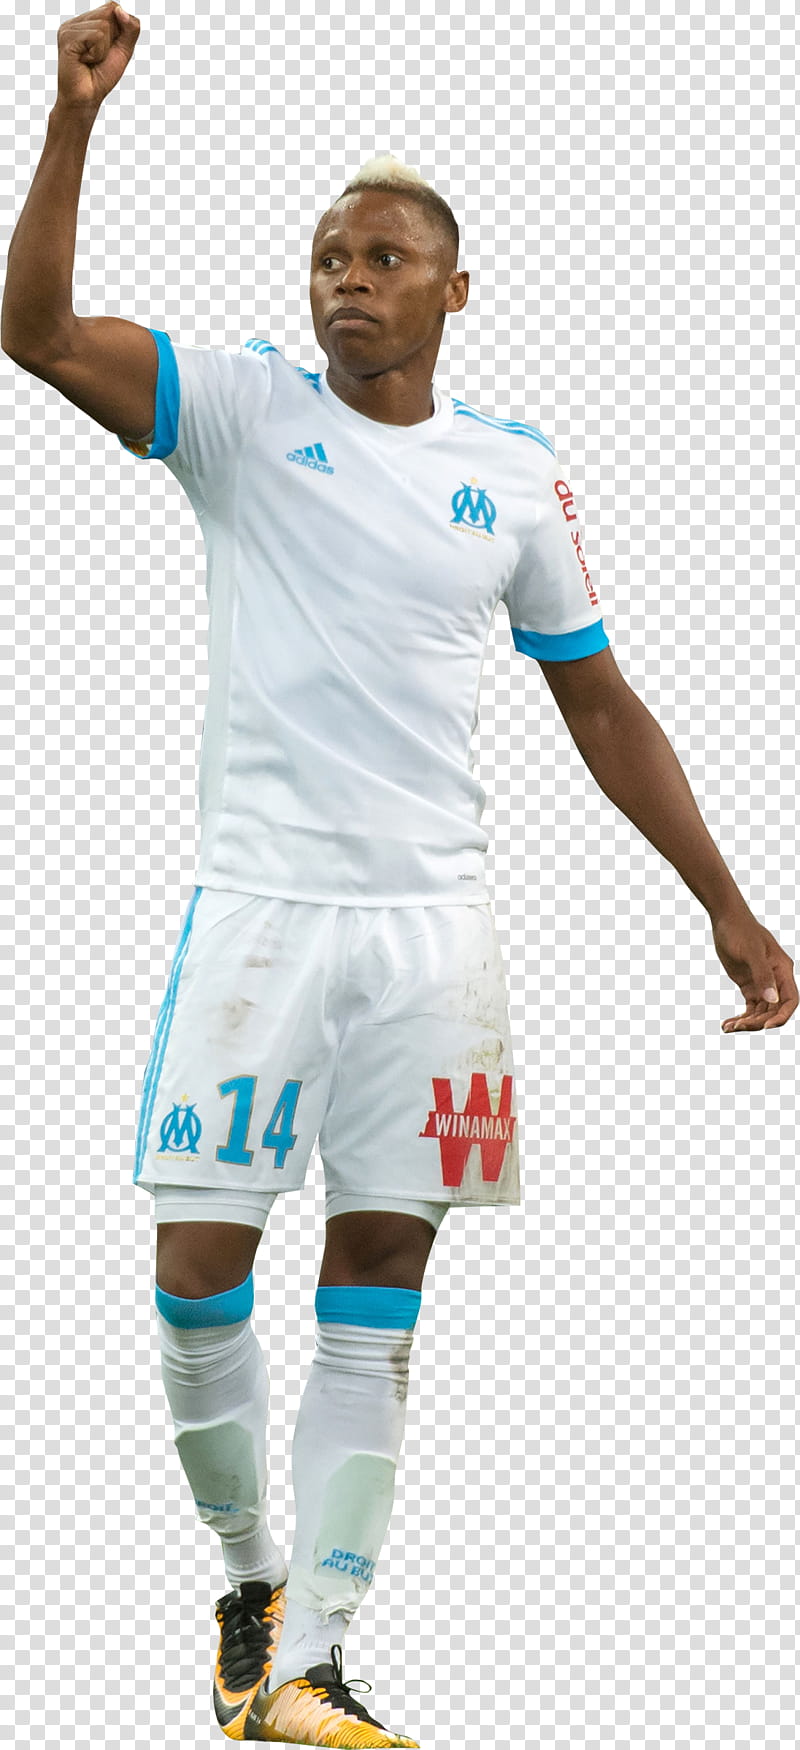 Soccer, Soccer Player, Football, Sports, Olympique De Marseille, Team Sport, Tshirt, Football Player transparent background PNG clipart